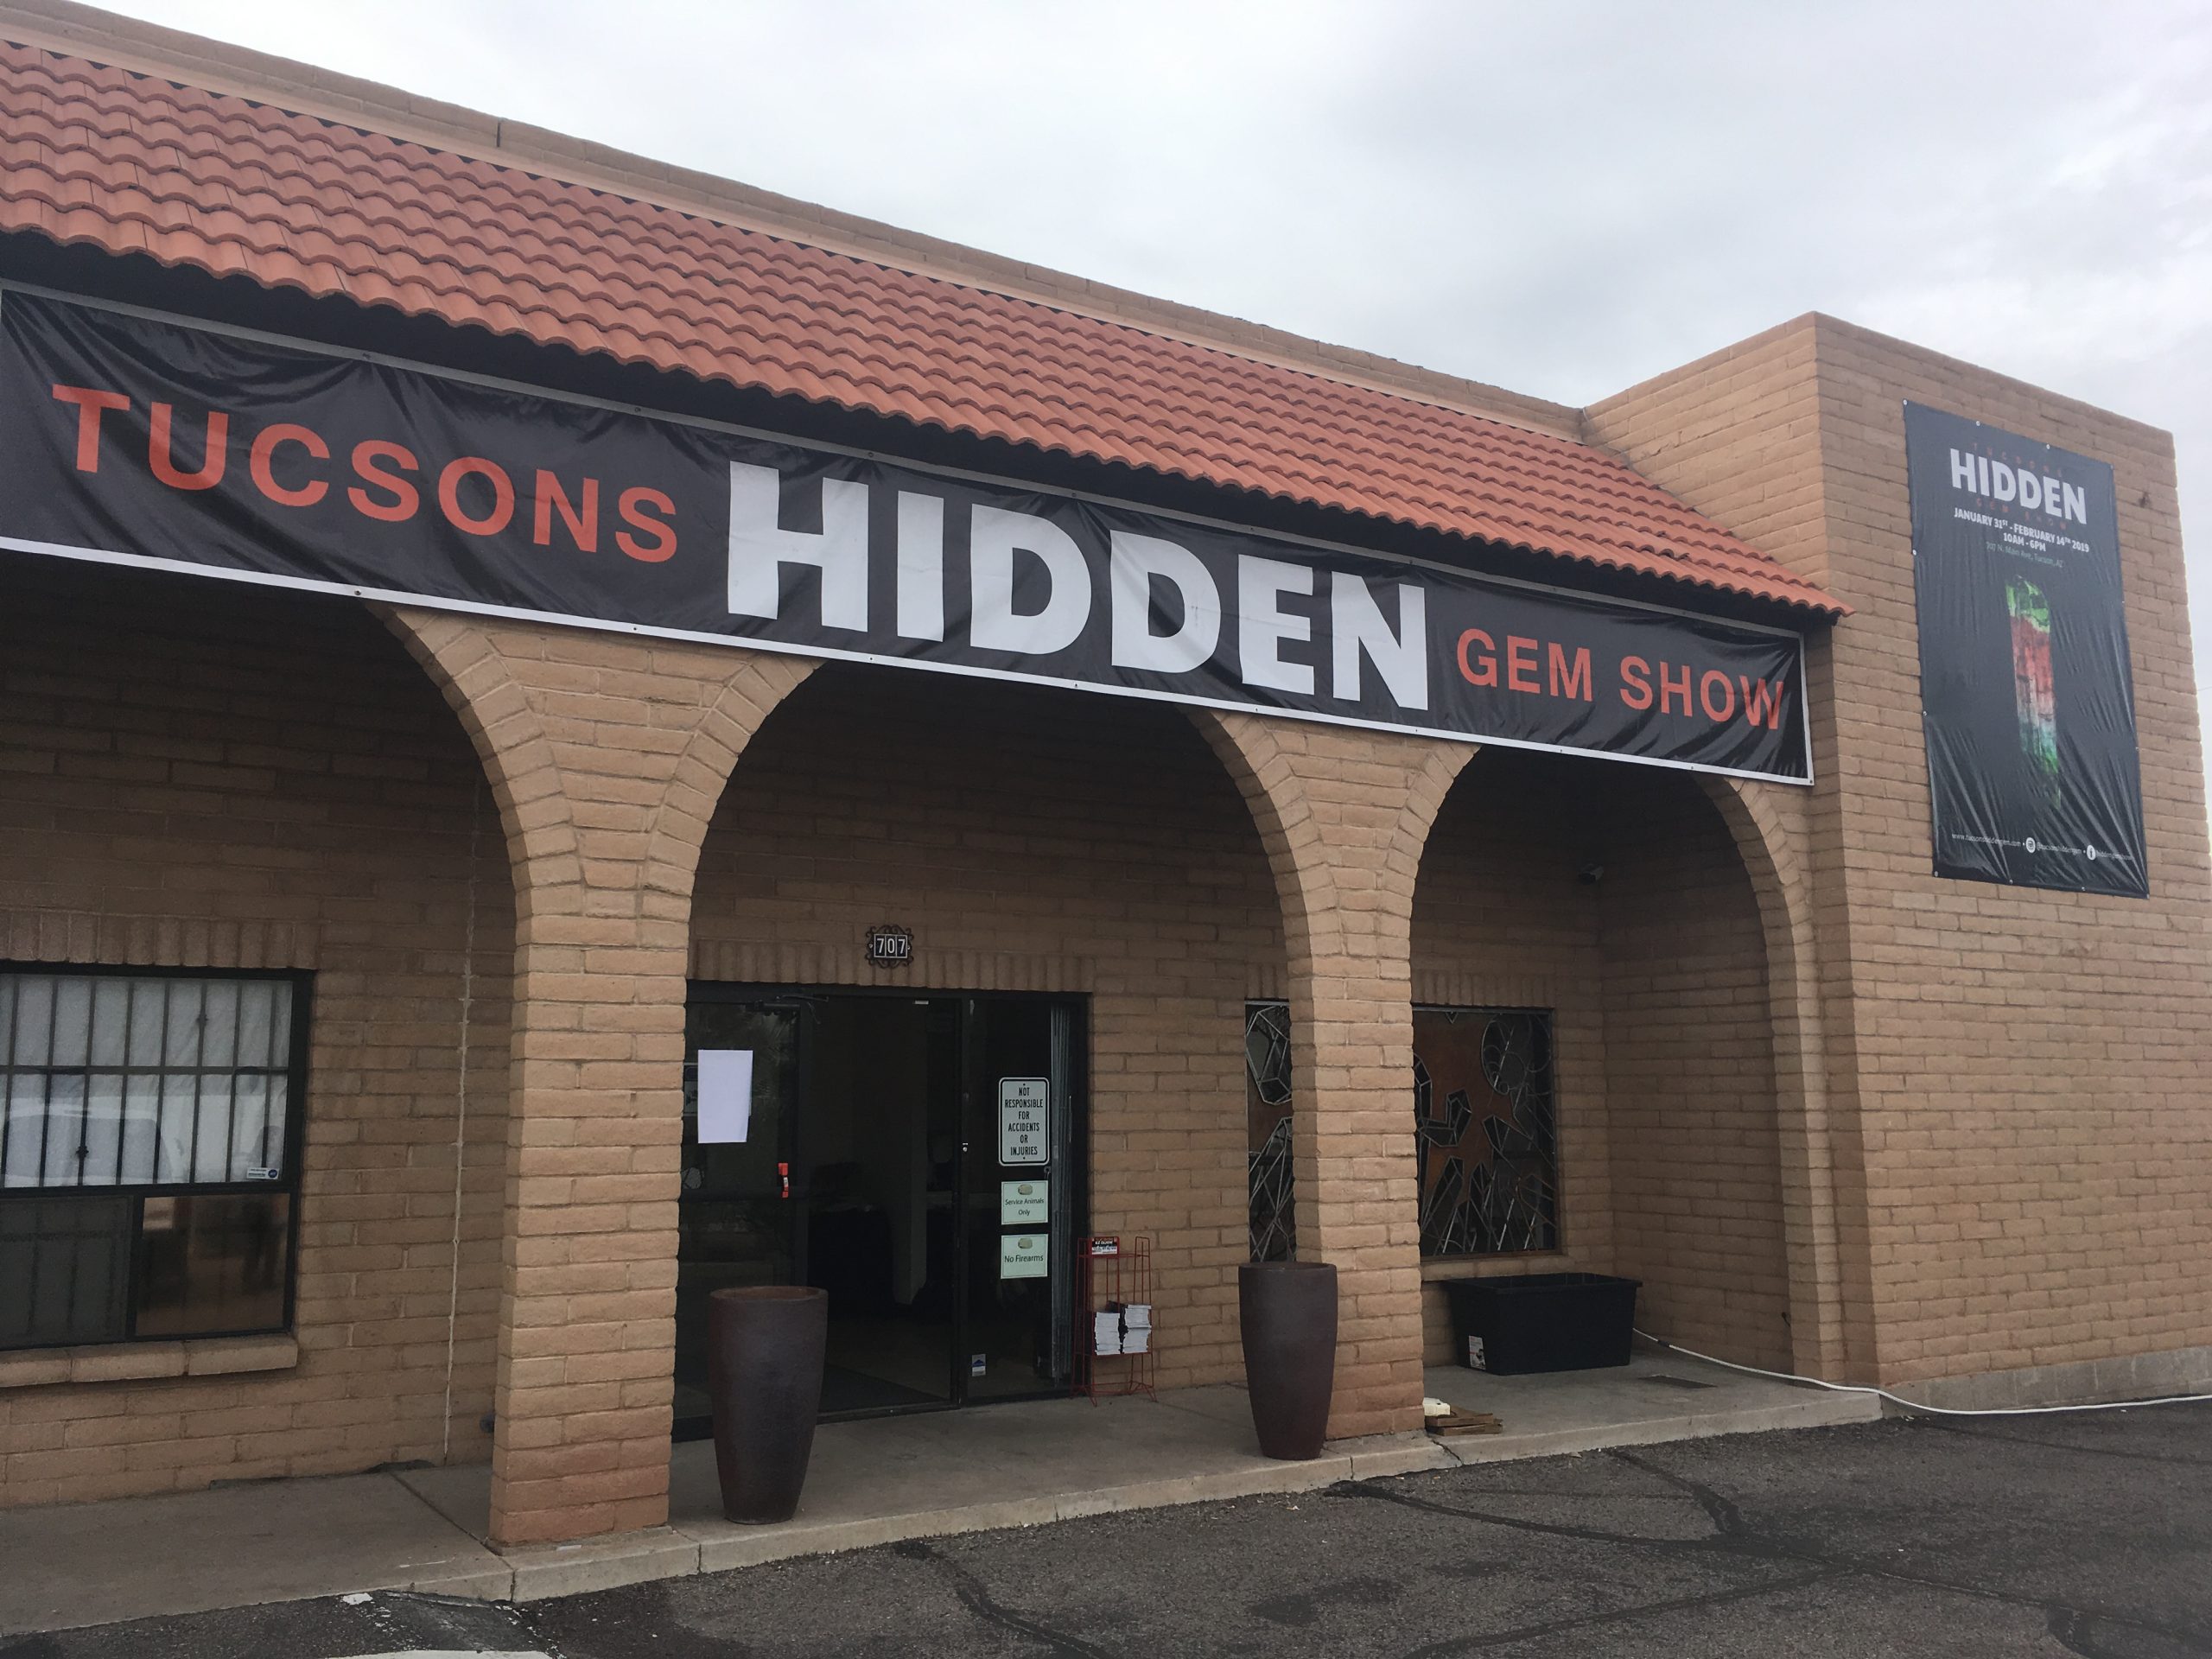 Tucson’s Hidden Gem Show